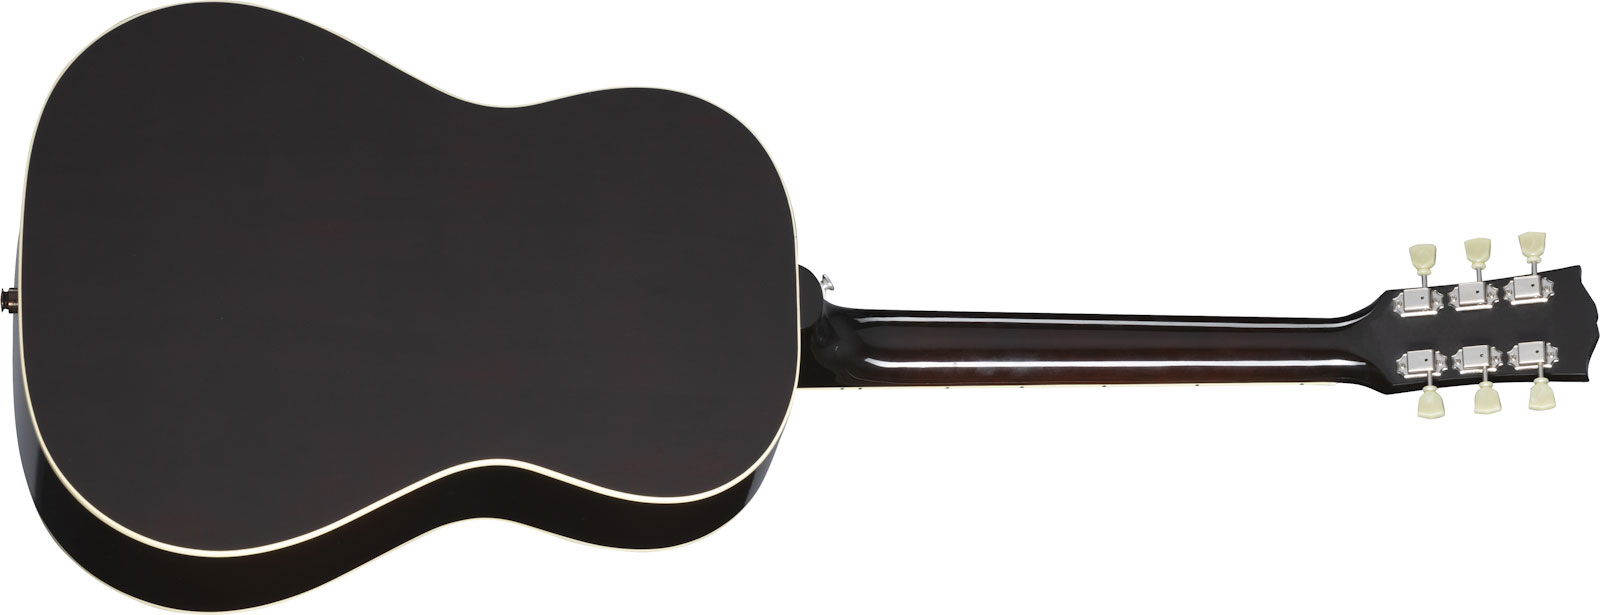 Gibson Nathaniel Rateliff Lg-2 Western Signature Epicea Acajou Rw - Vintage Sunburst - Elektroakustische Gitarre - Variation 1